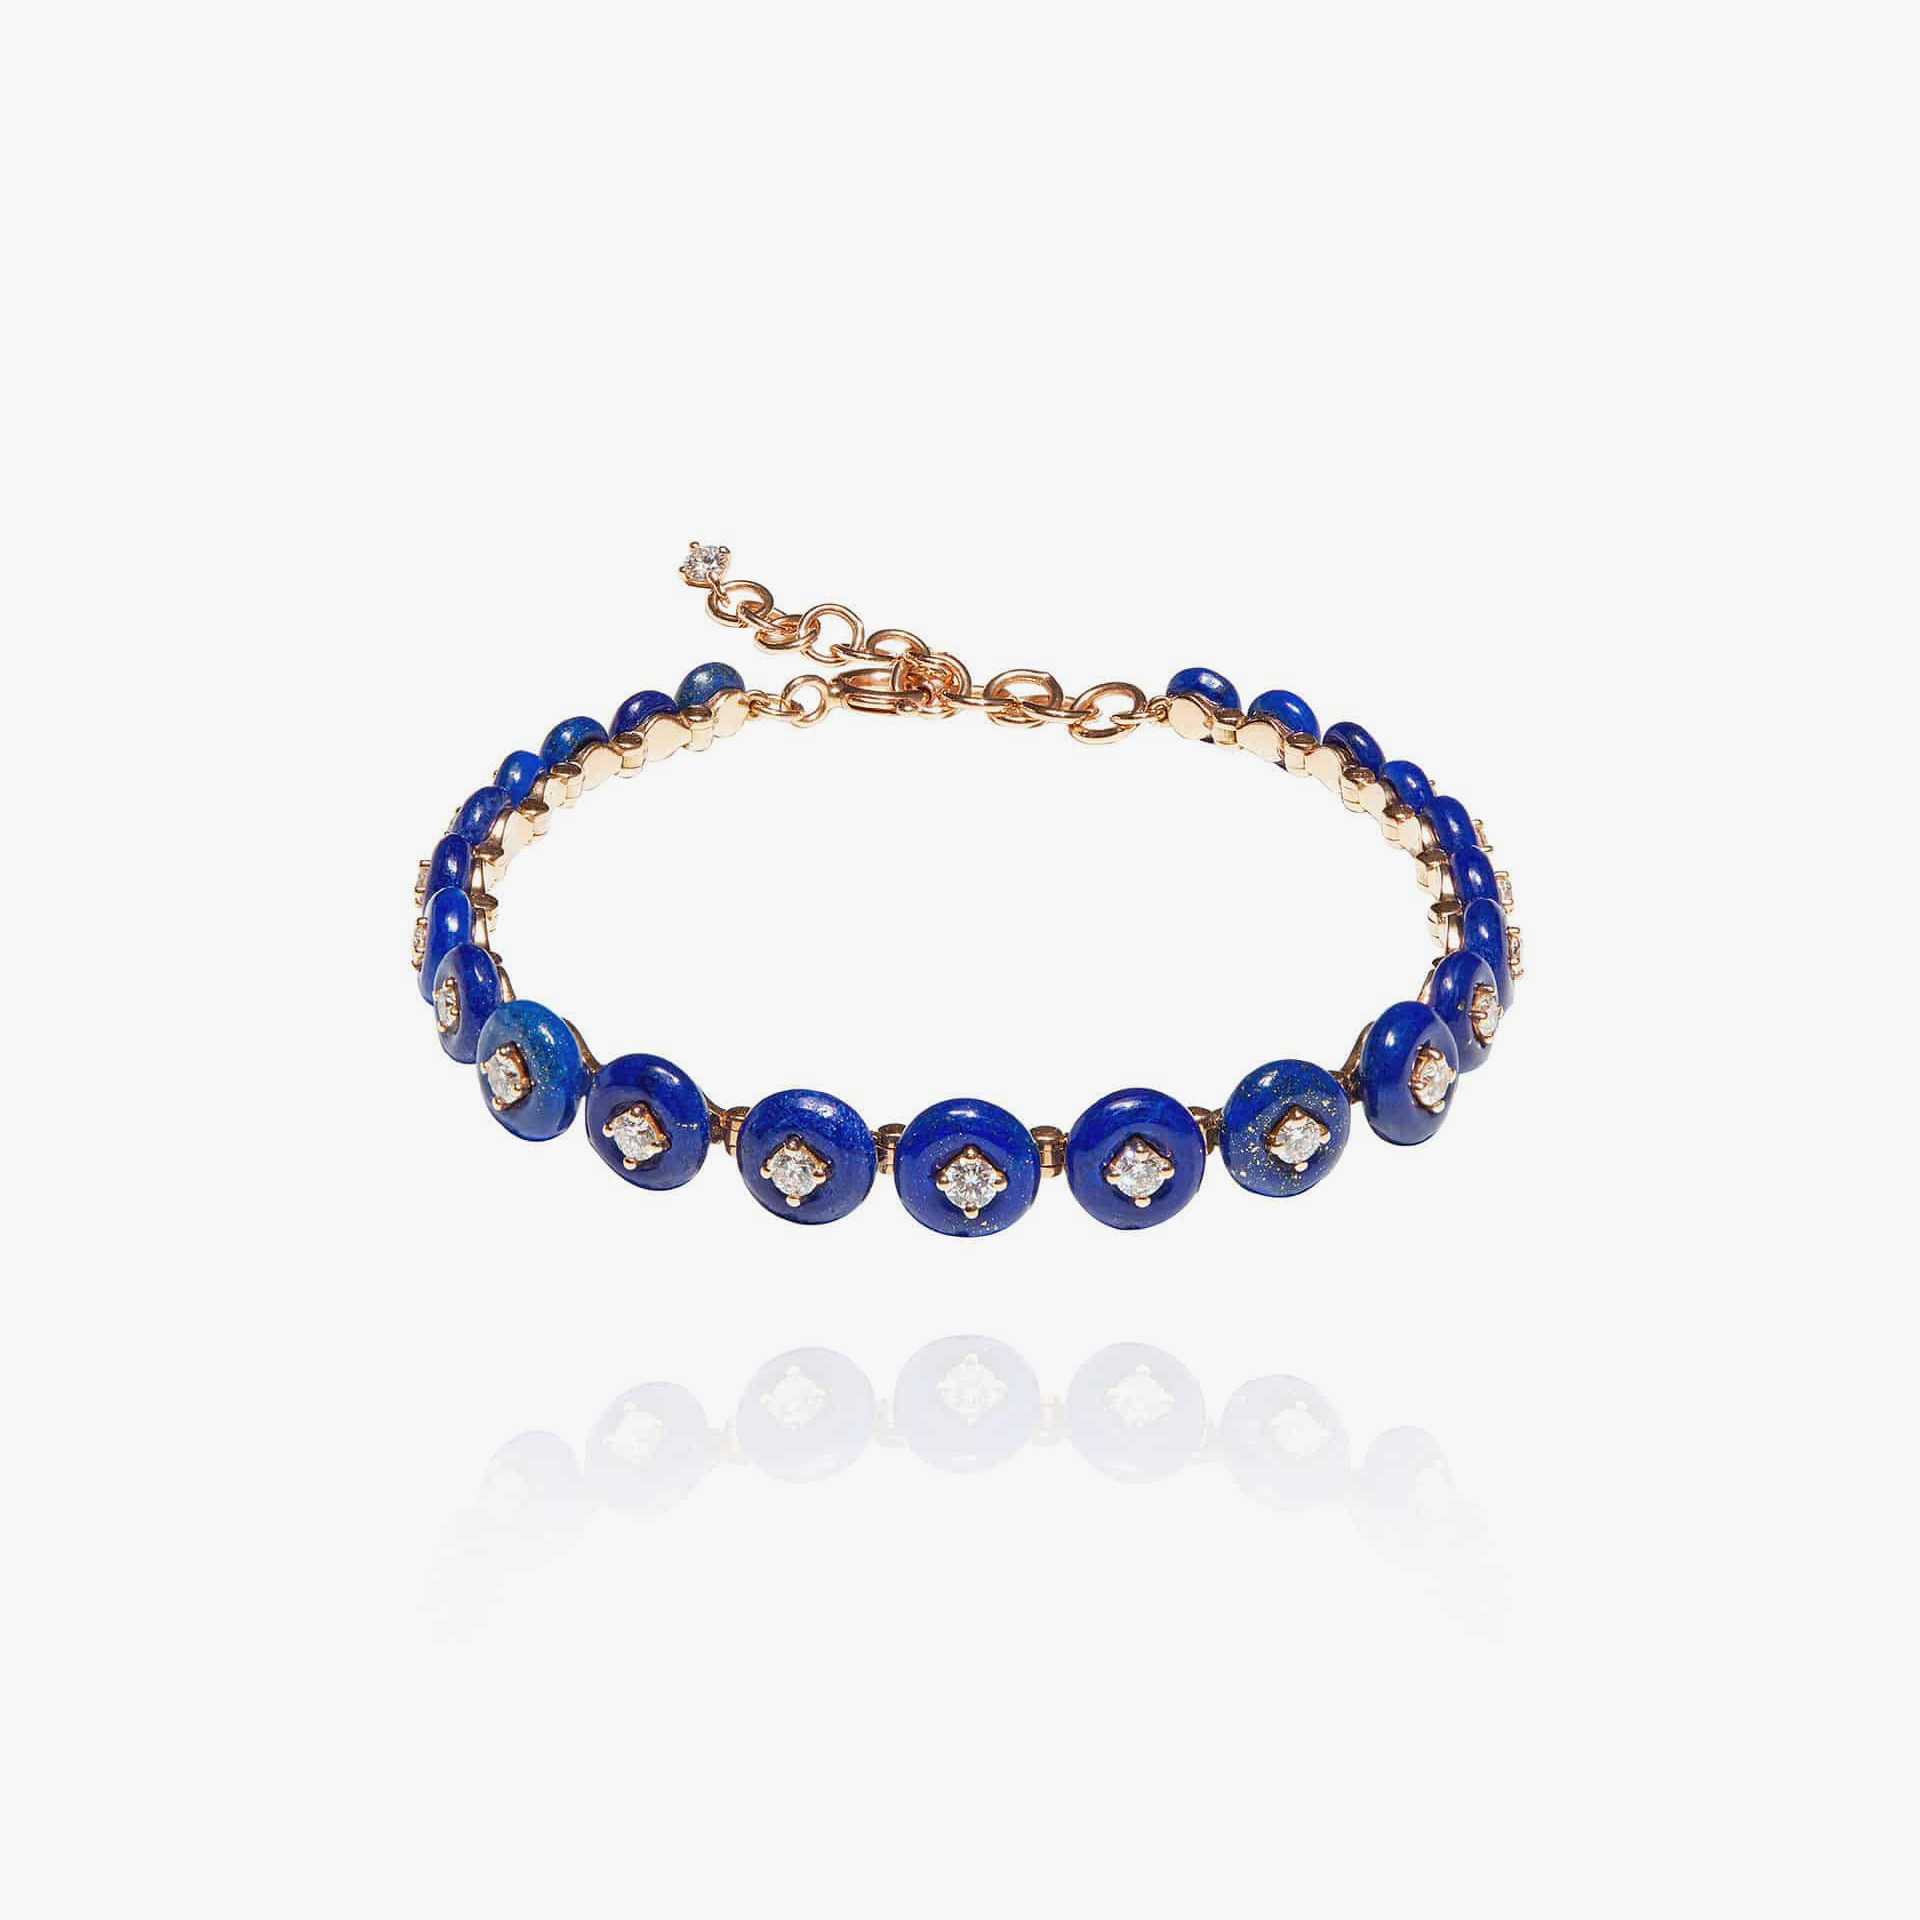 Surrounding Small Bracelet in Lapis Lazuli